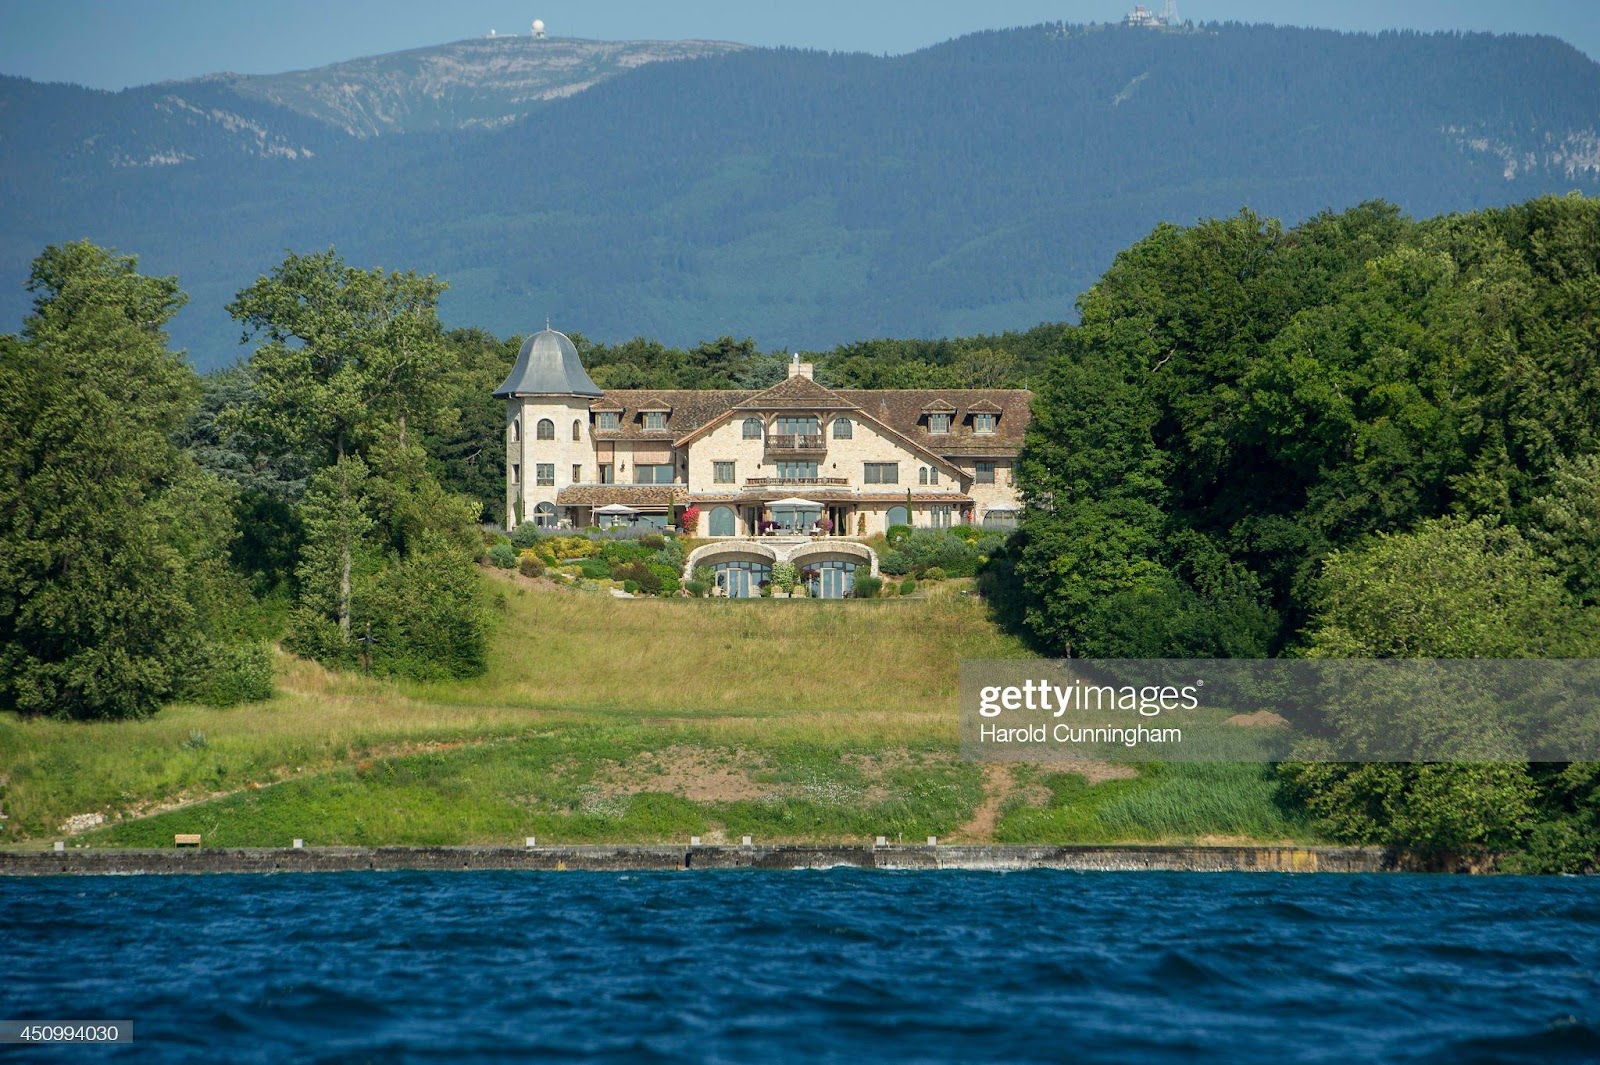 The 'Villa La Reserve', house of Formula One Champion Michael Schumacher, pictured on June 21, 2014 in Gland, Switzerland.